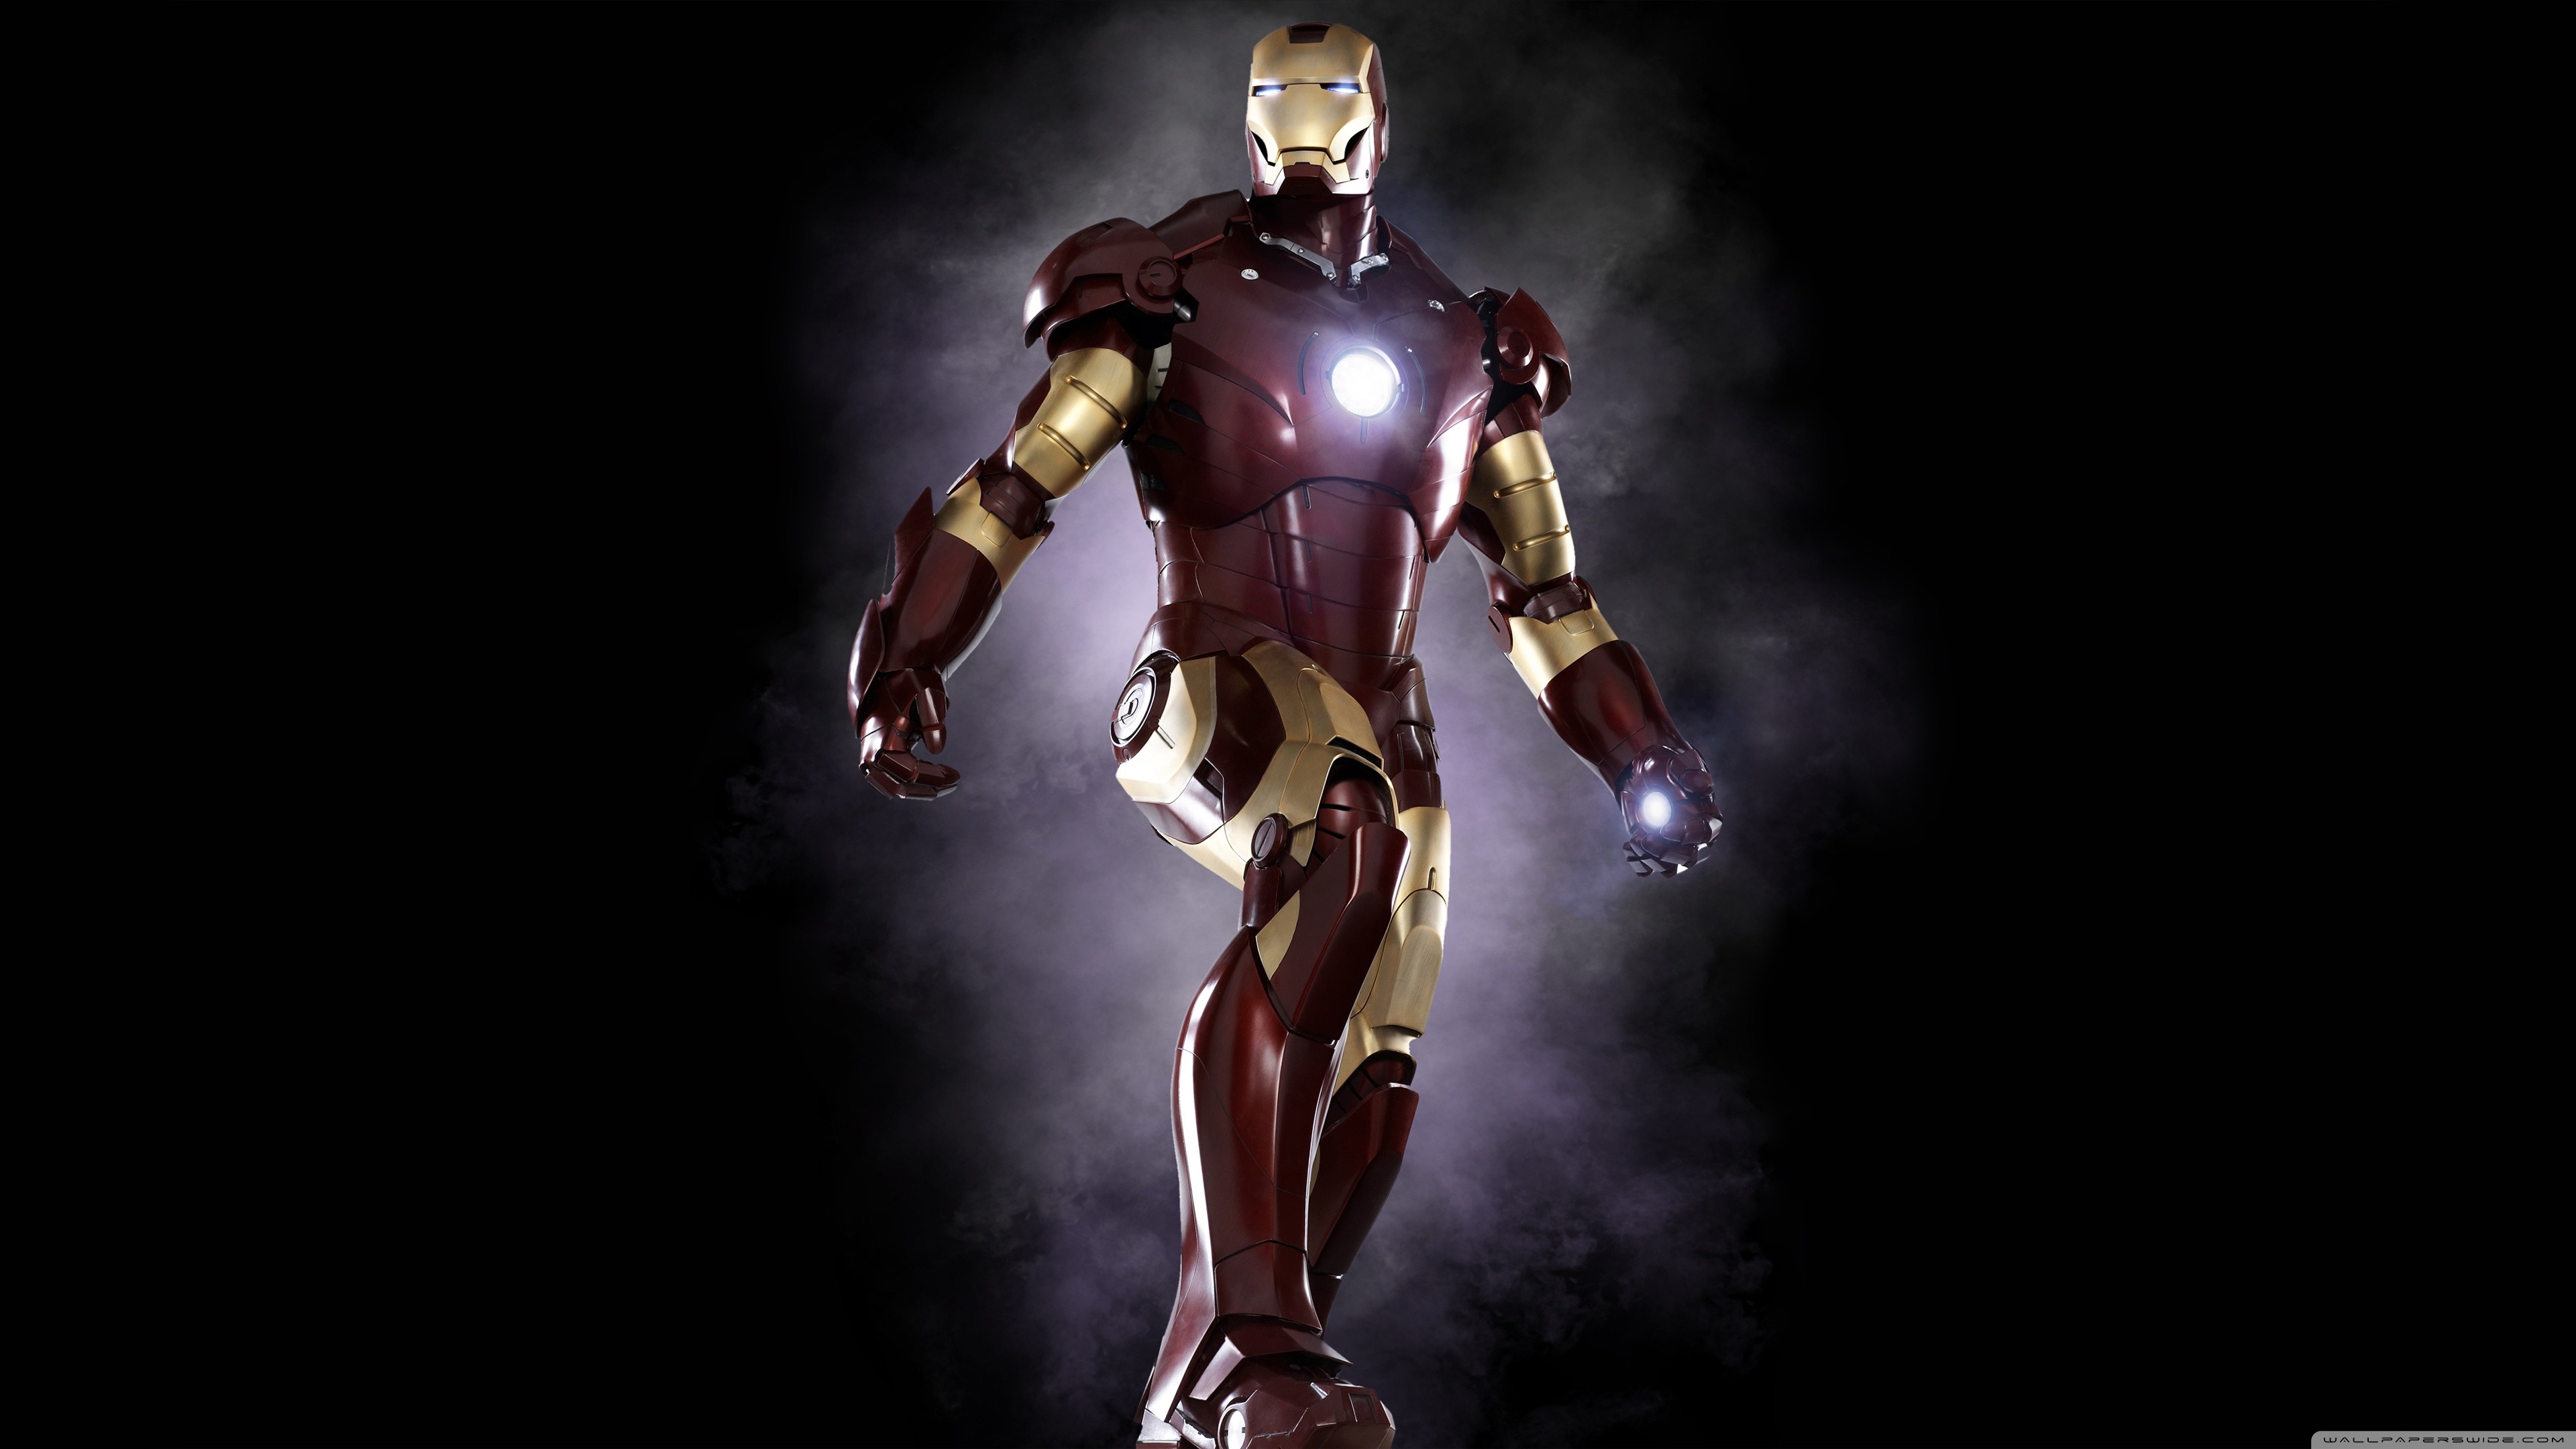 Iron Man digital wallpaper Marvel Comics copy space machinery  마블 바탕화면  아이언 맨 배경화면